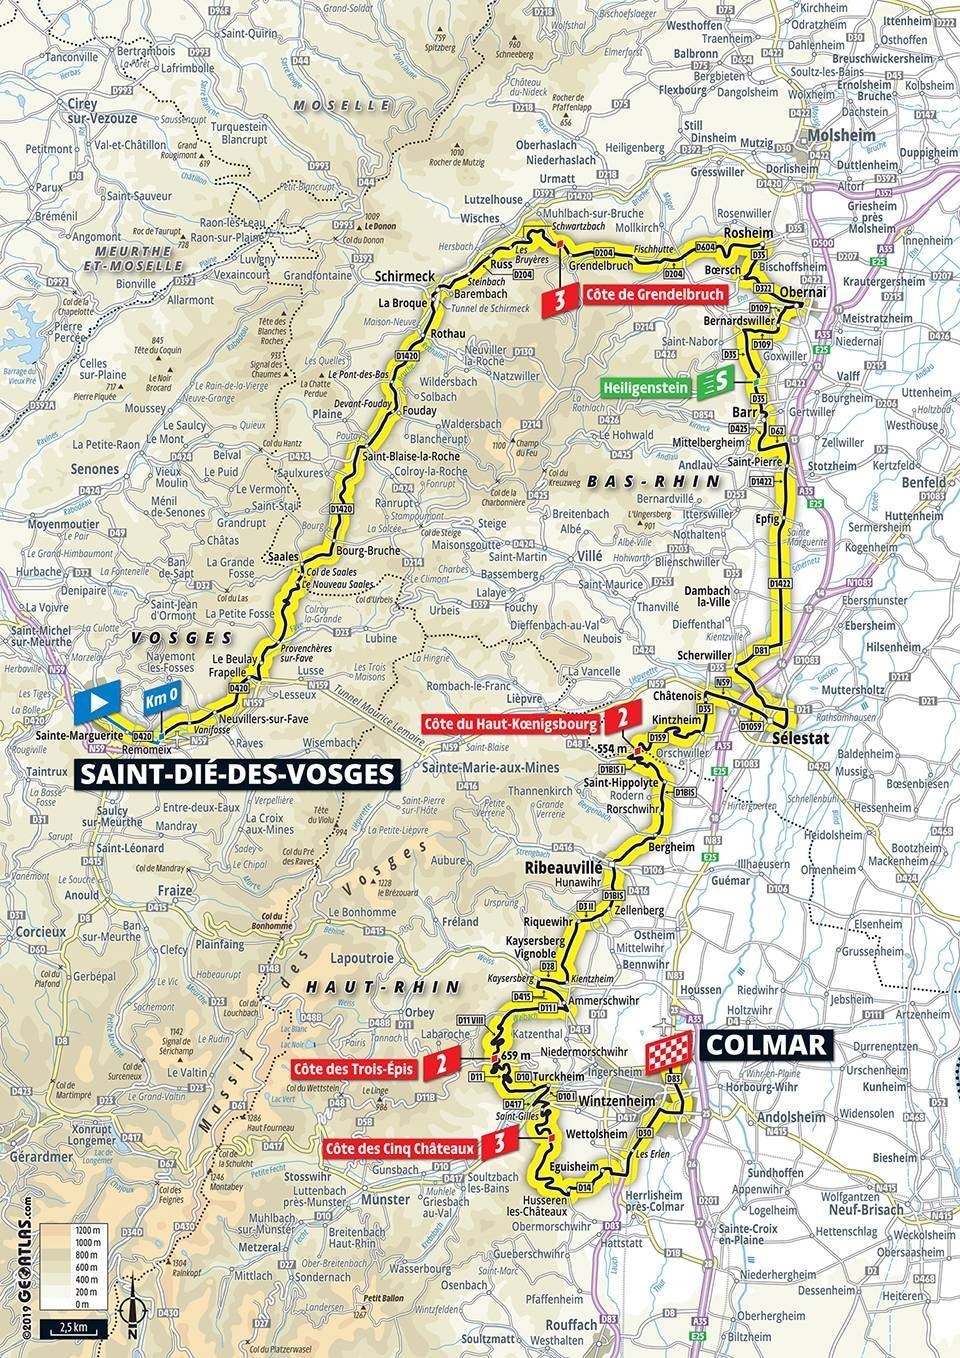 Tour de France 2019 - Planimetria Tappa 5